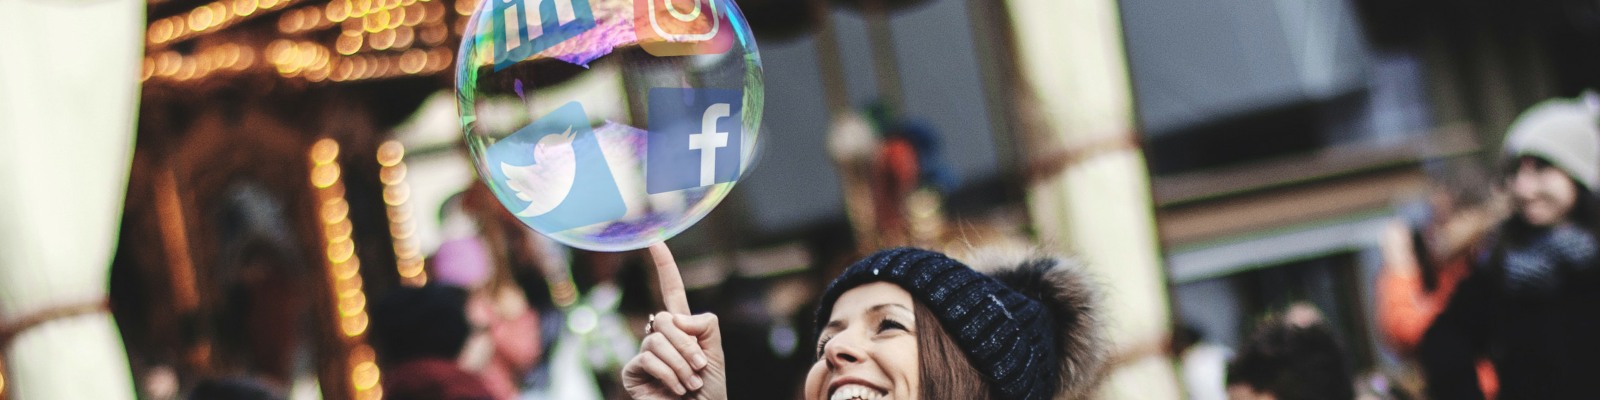 has your social media bubble burst